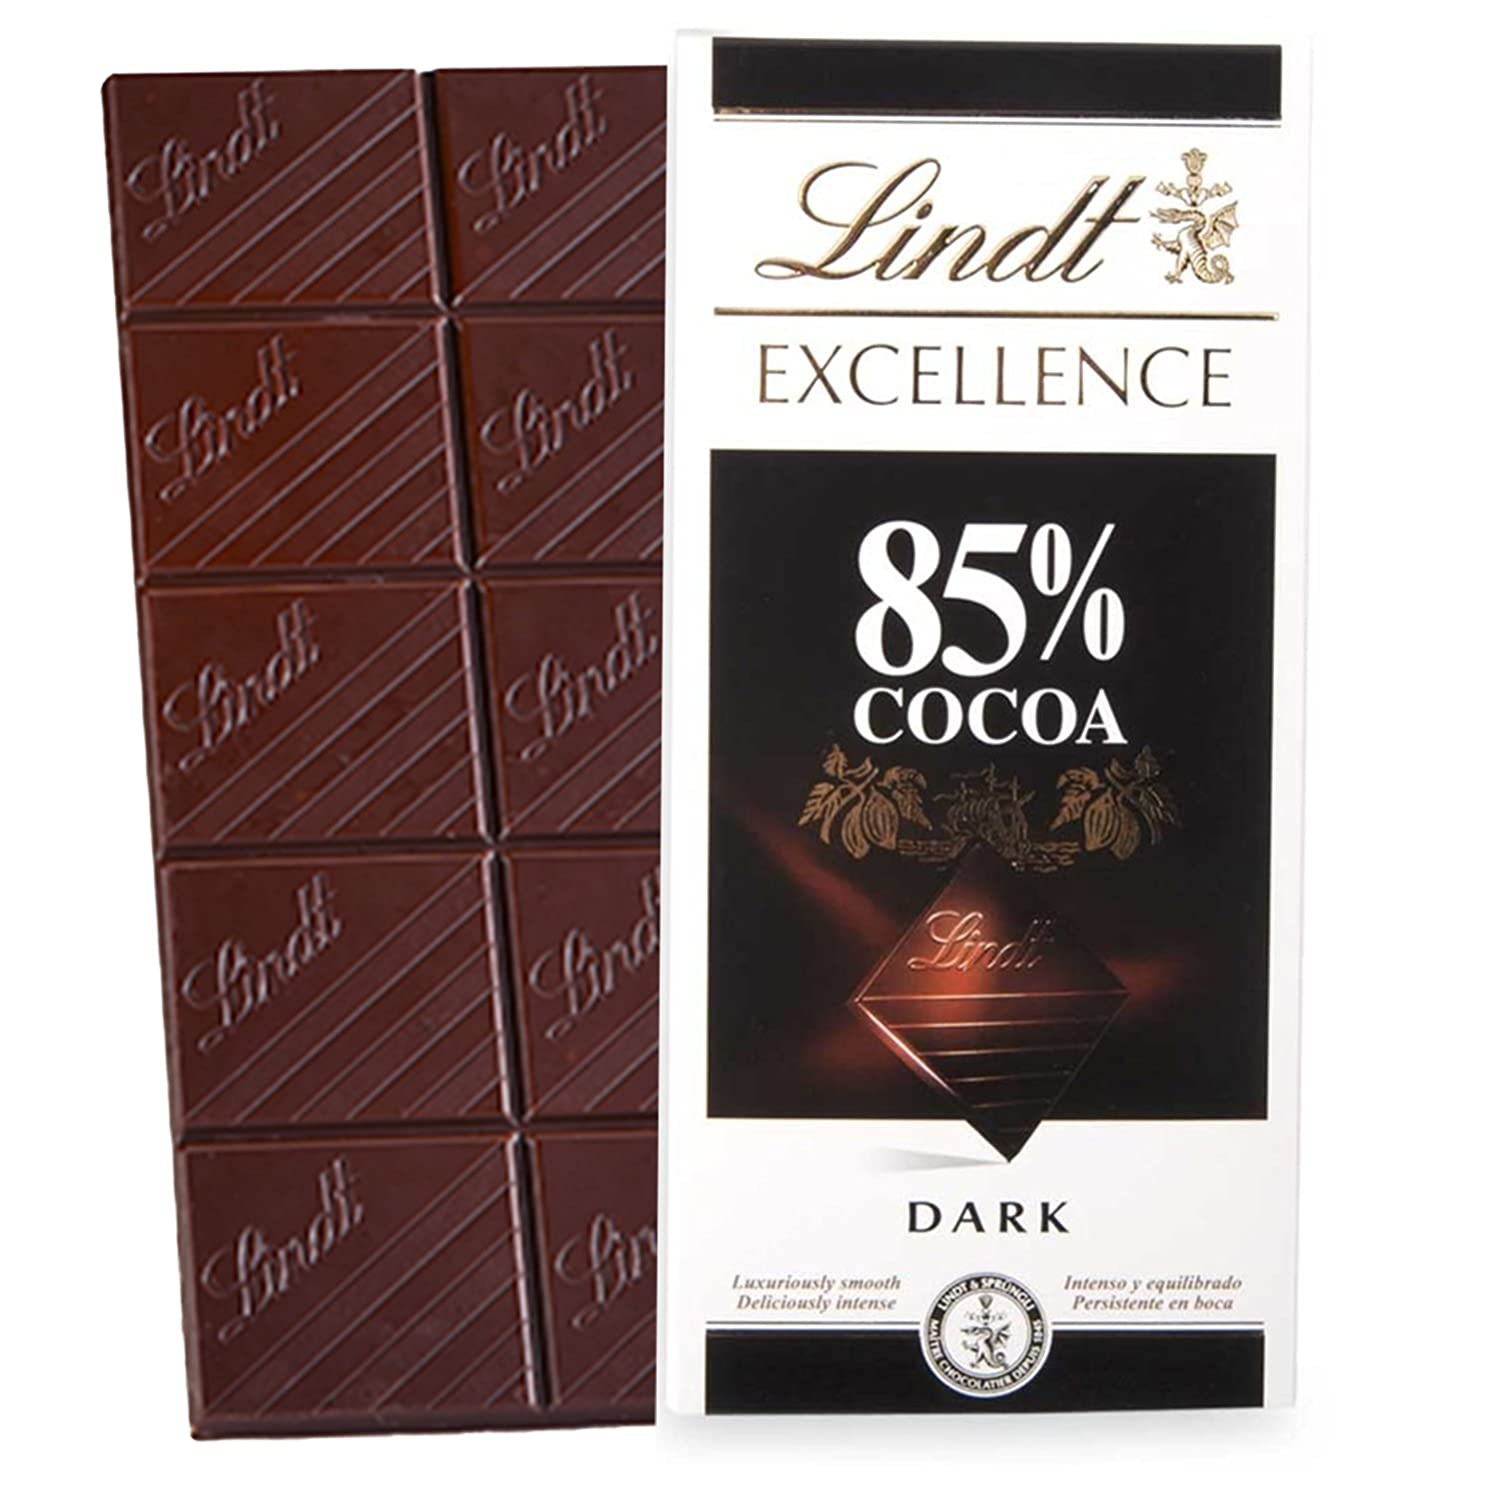 Lindt 85% Dark Chocolate Bar Image